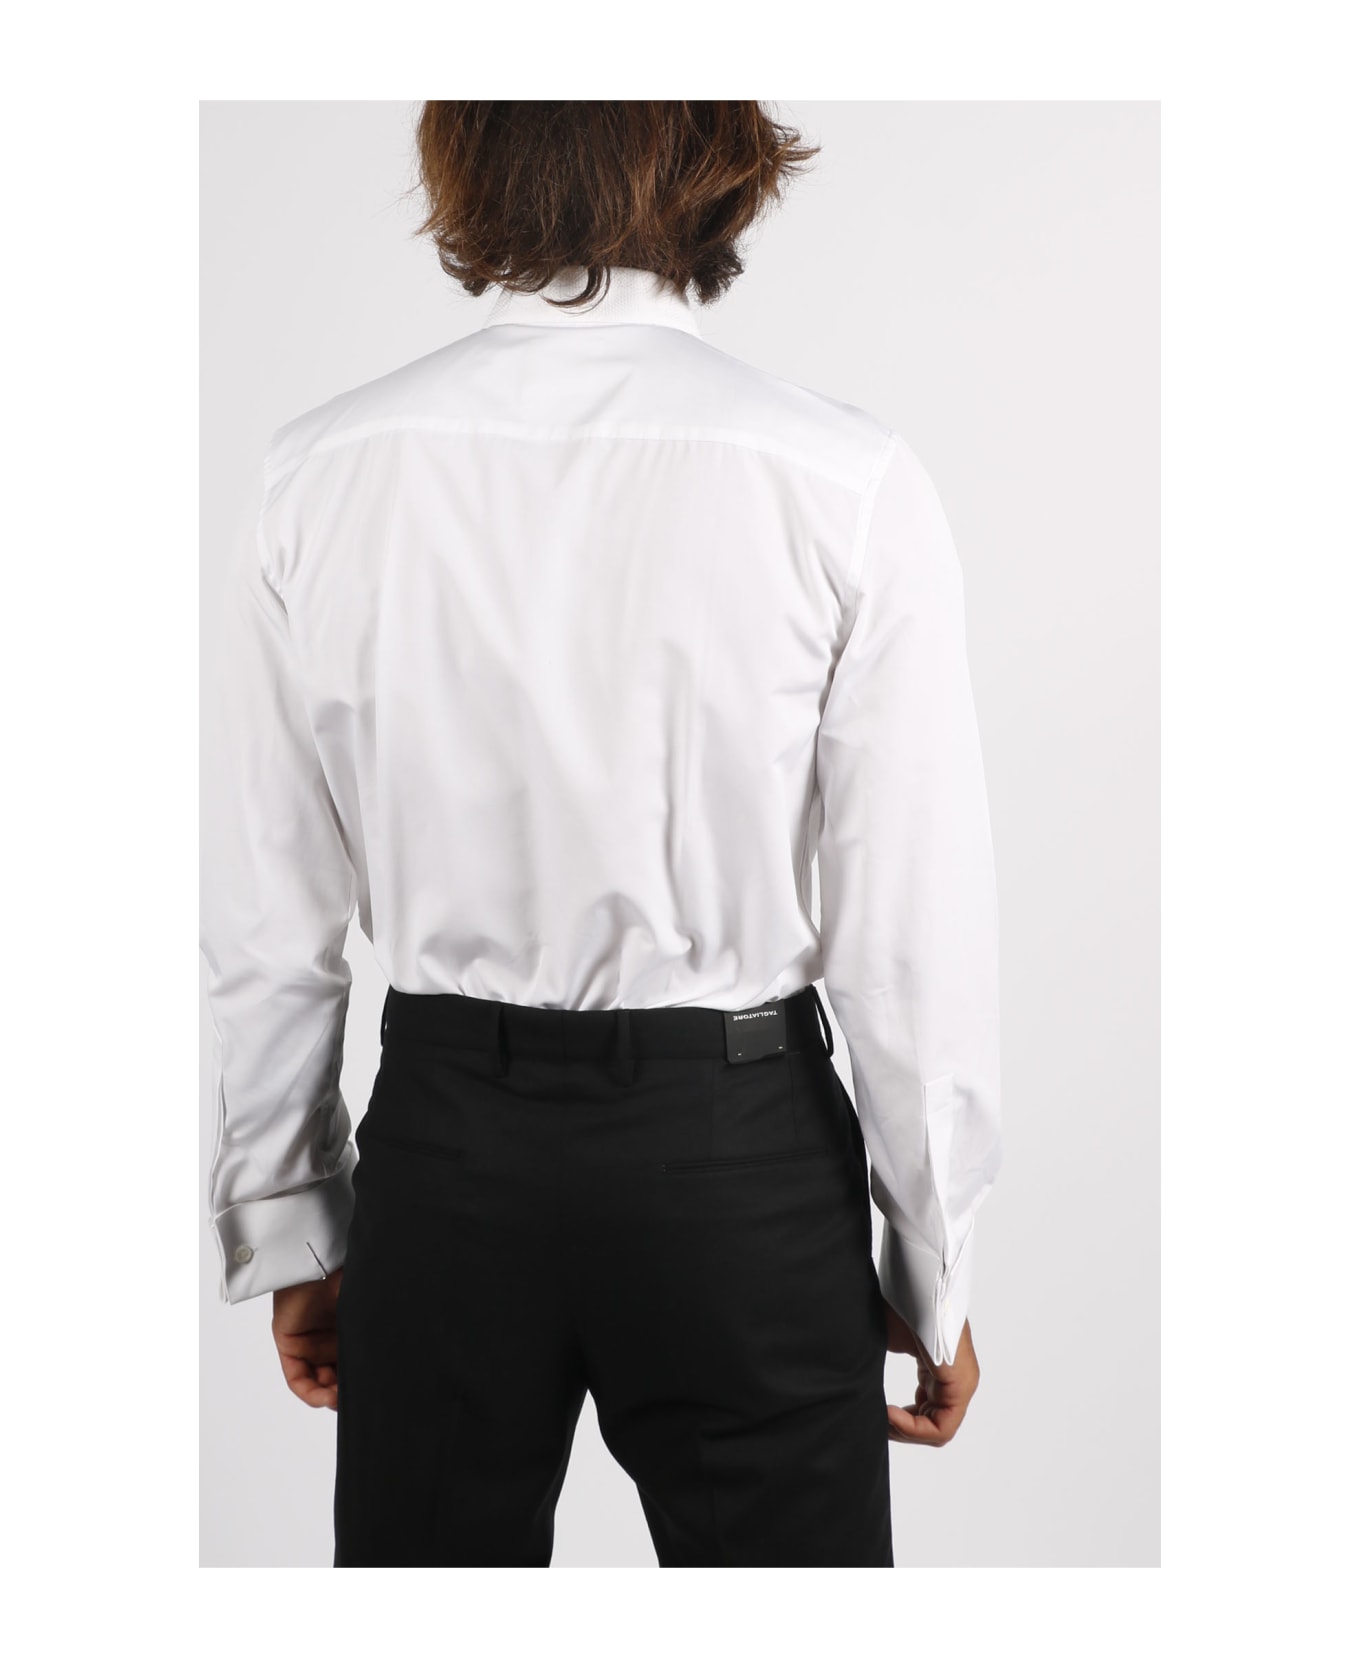 Givenchy Tuxedo Shirt